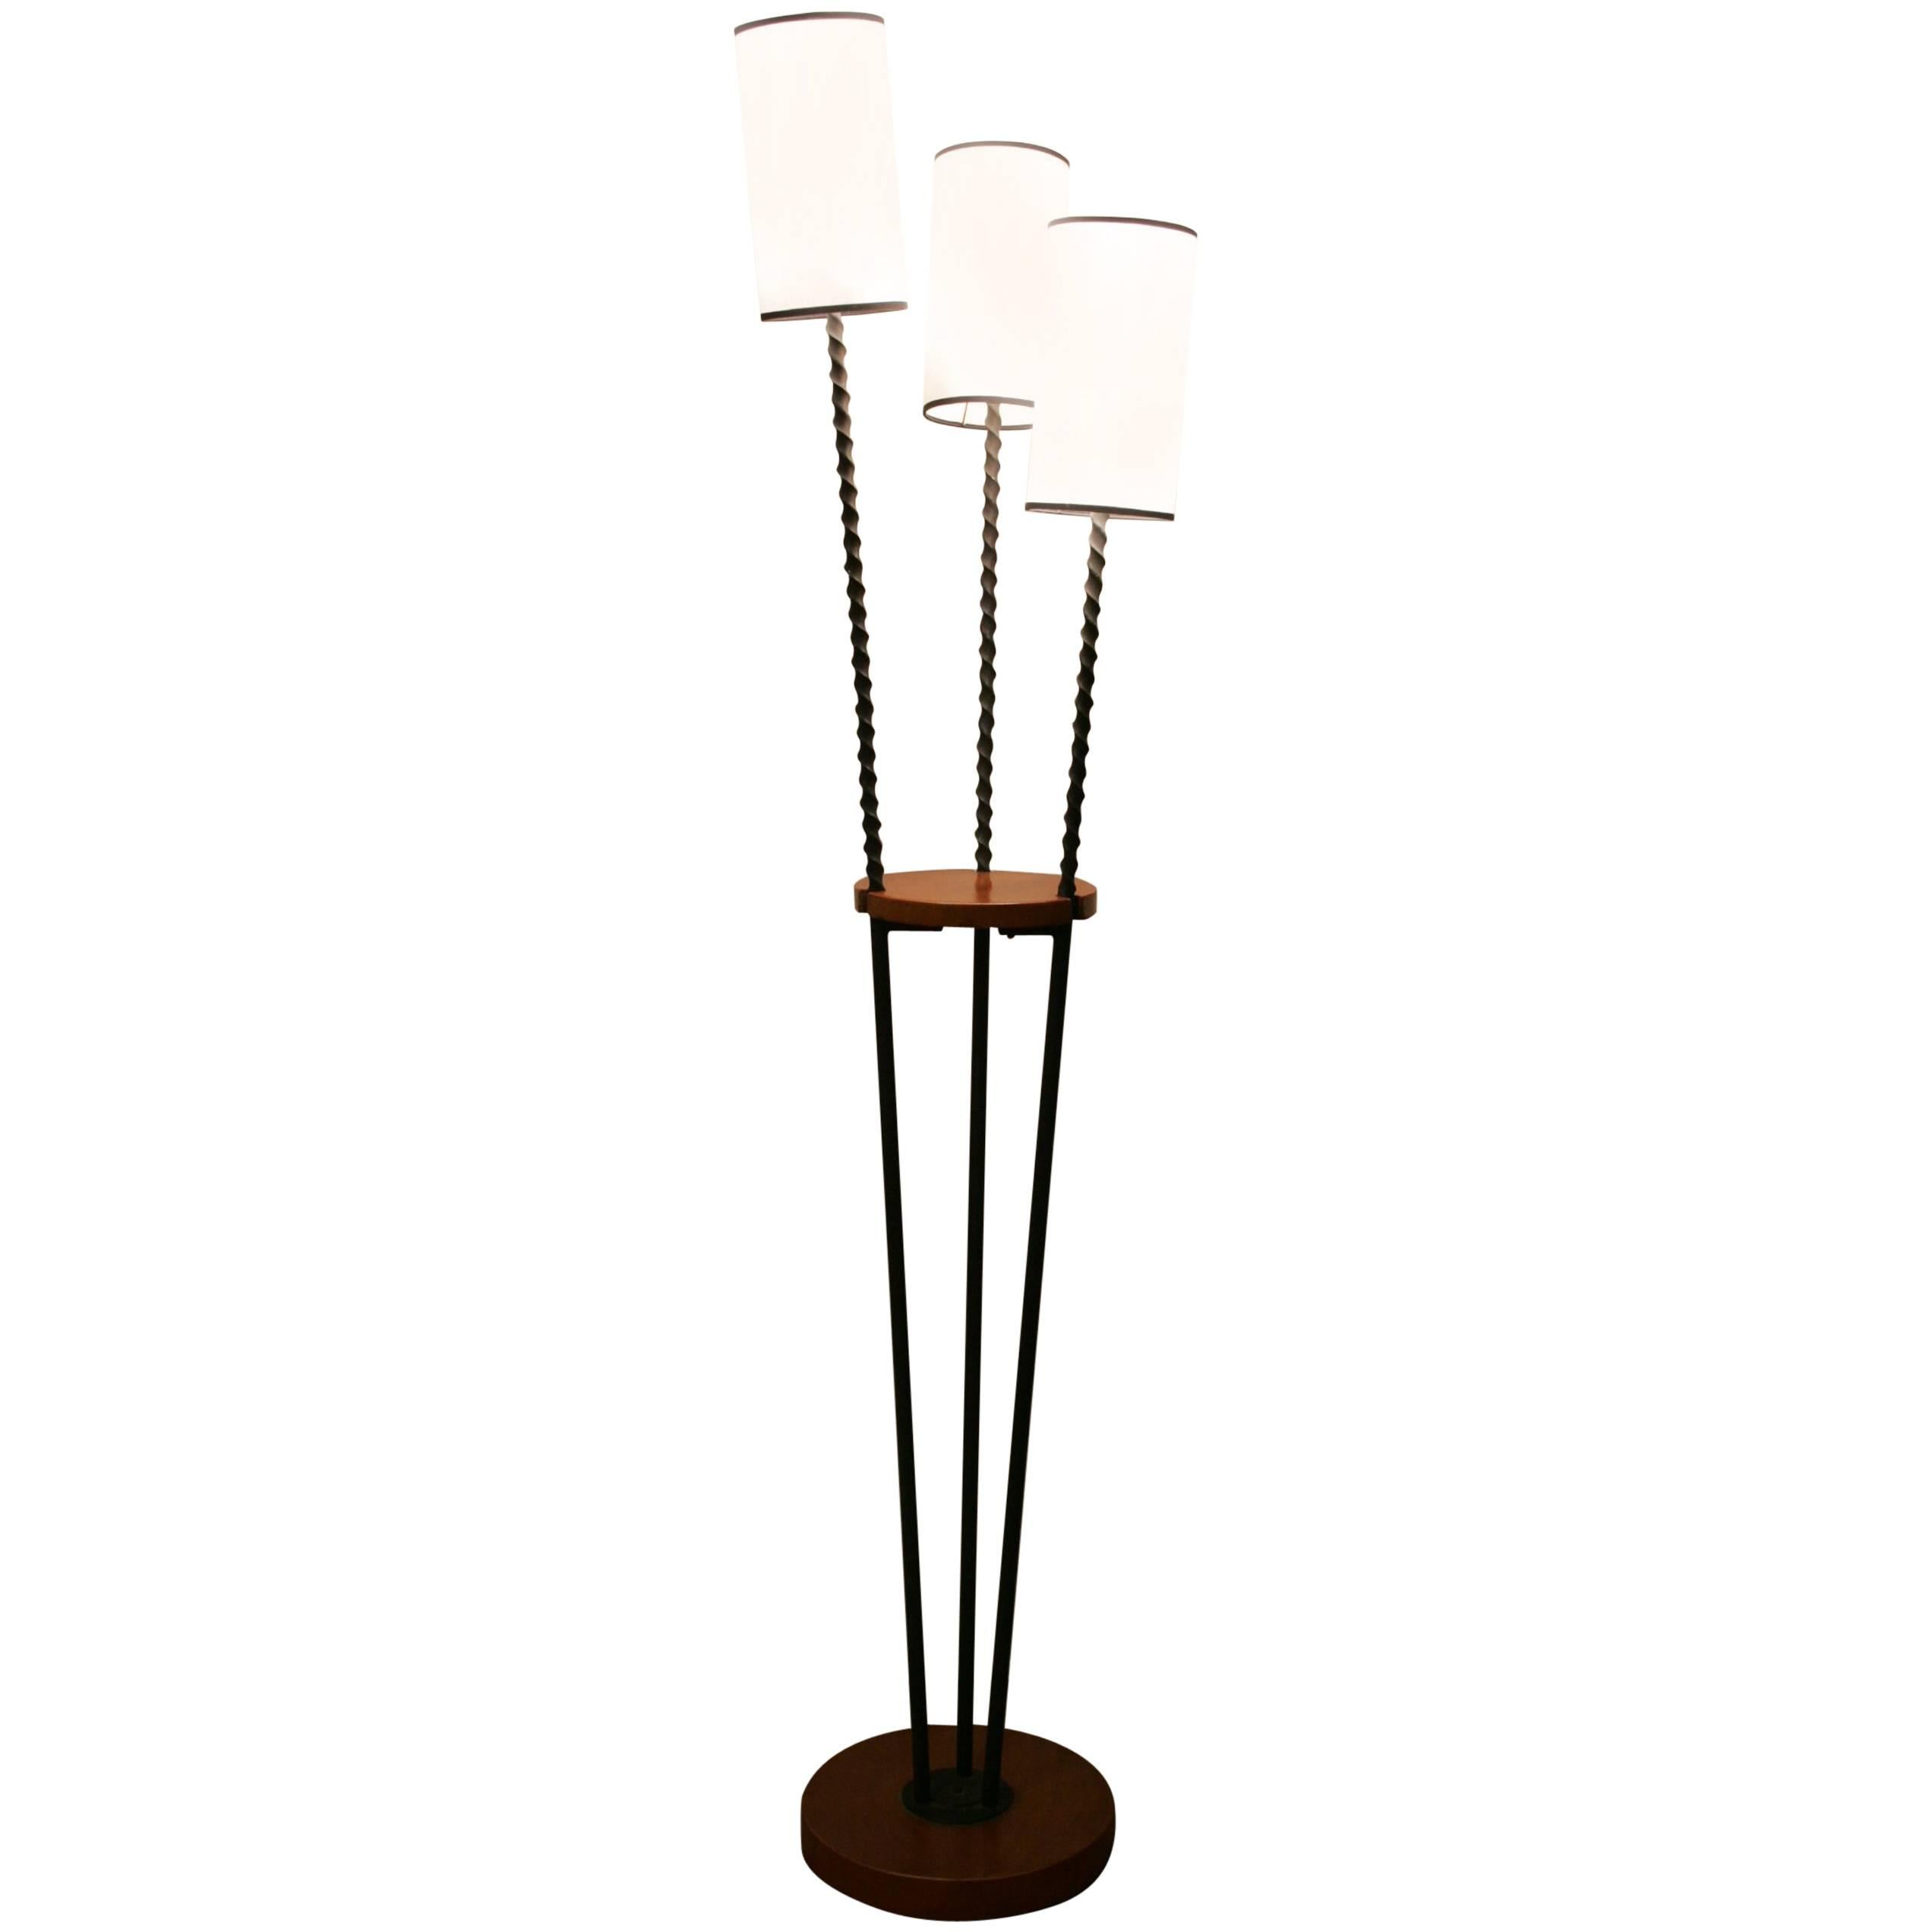 Midcentury French Modern Floor Lamp For Sale